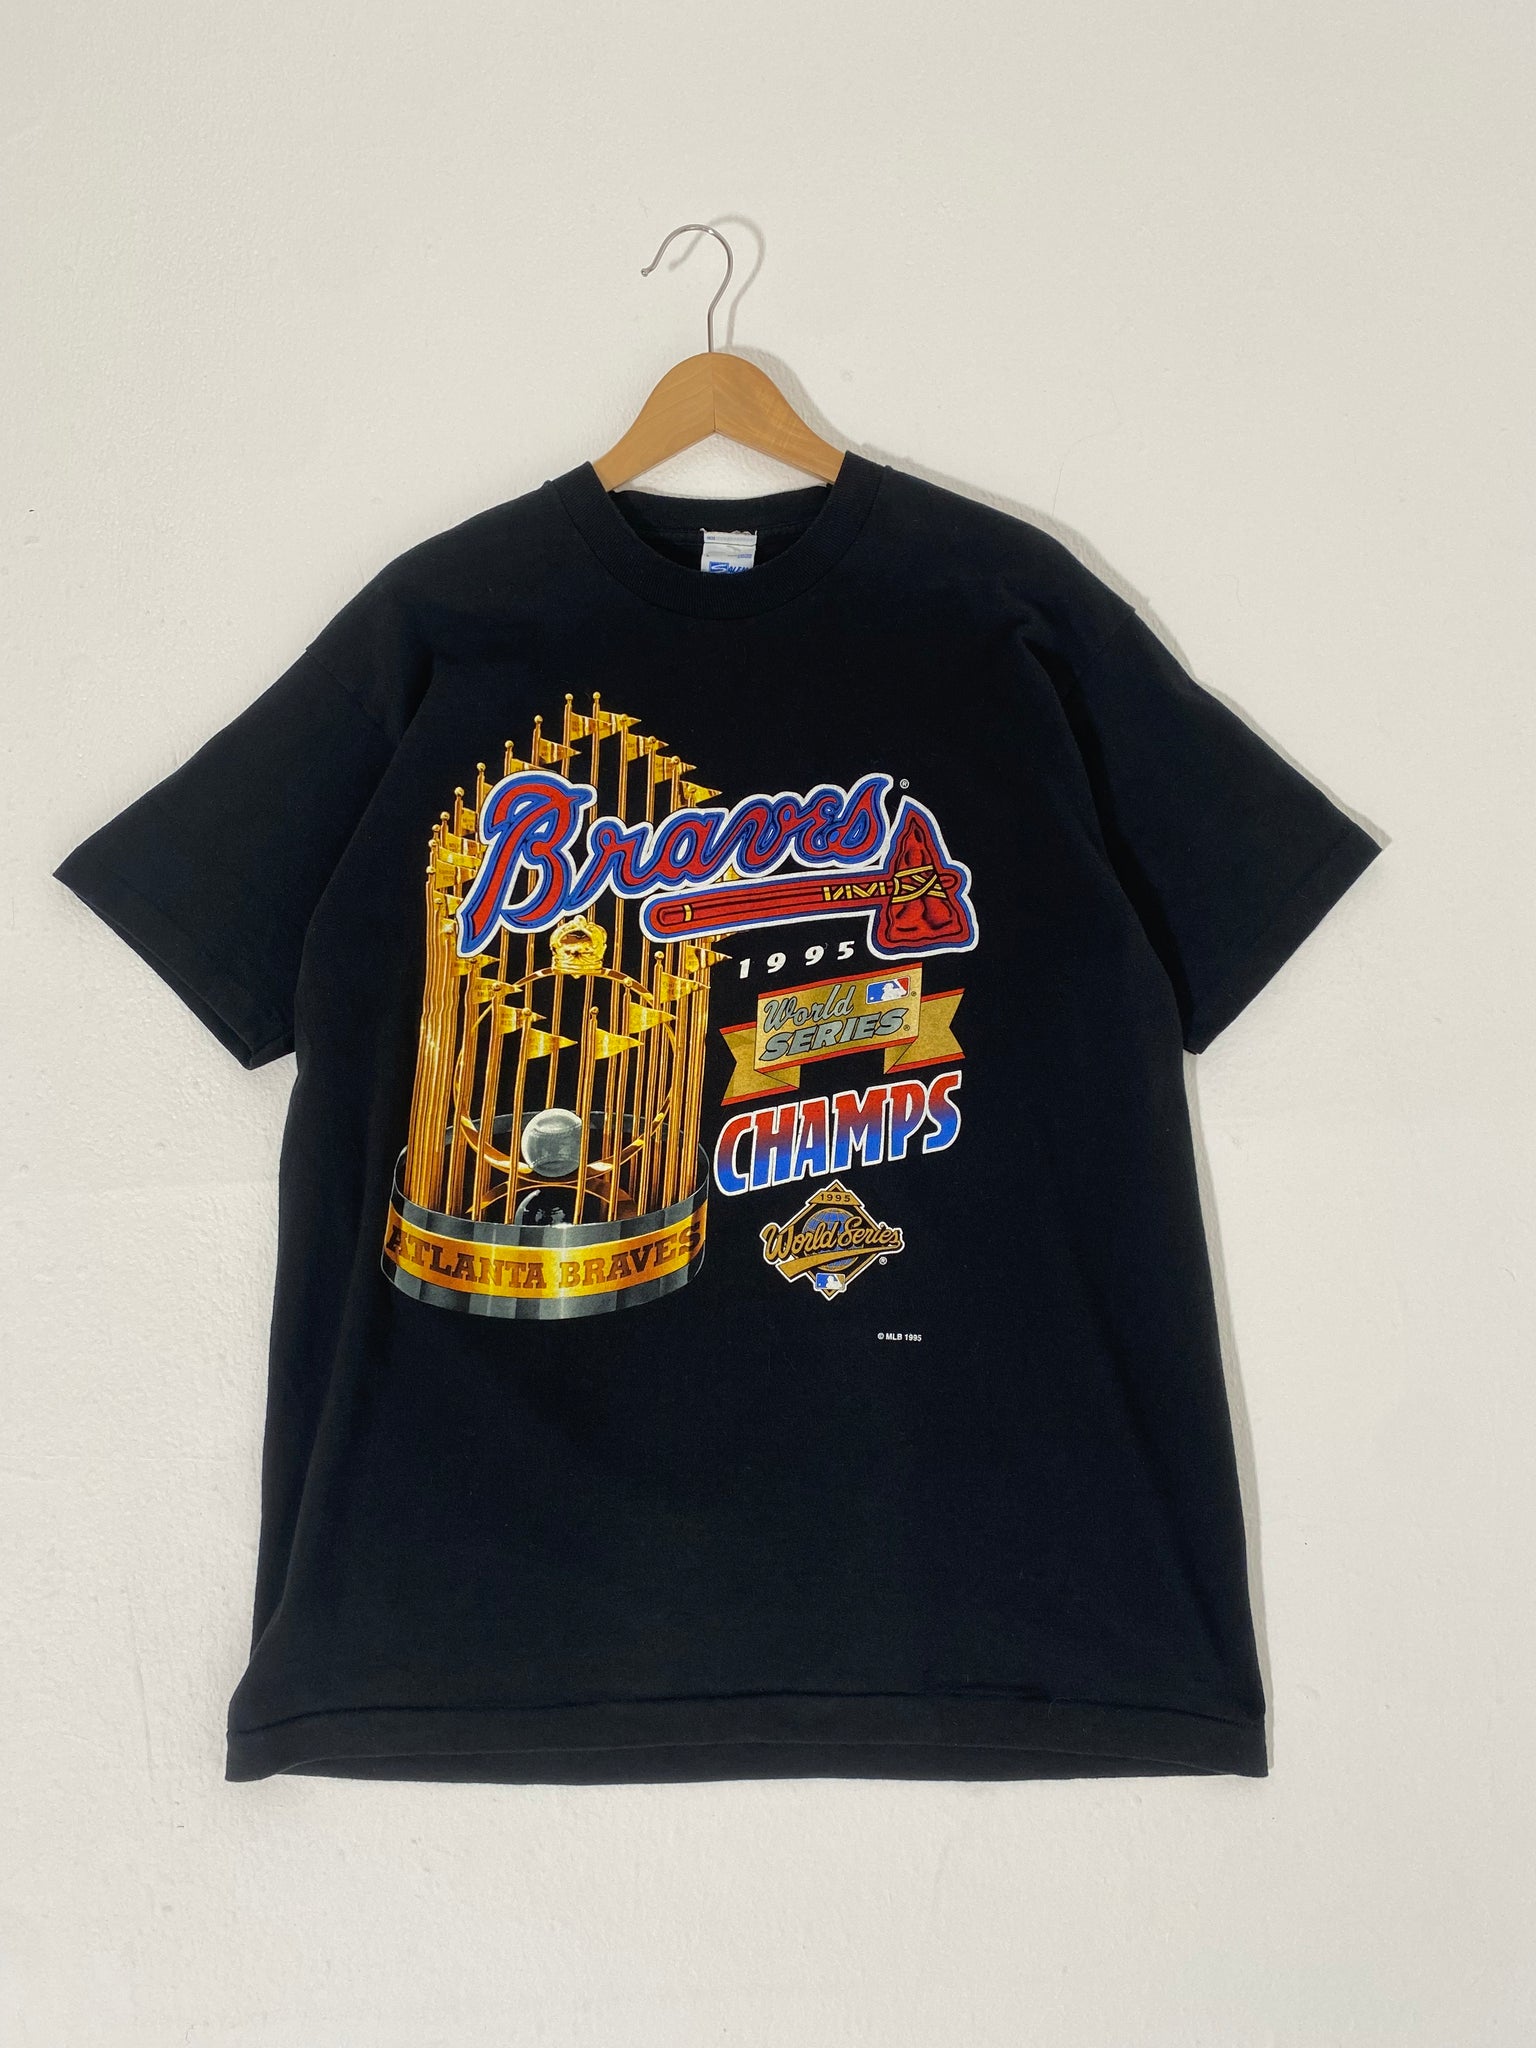 Vintage 1995 Atlanta Braves World Series Champions T-shirt 